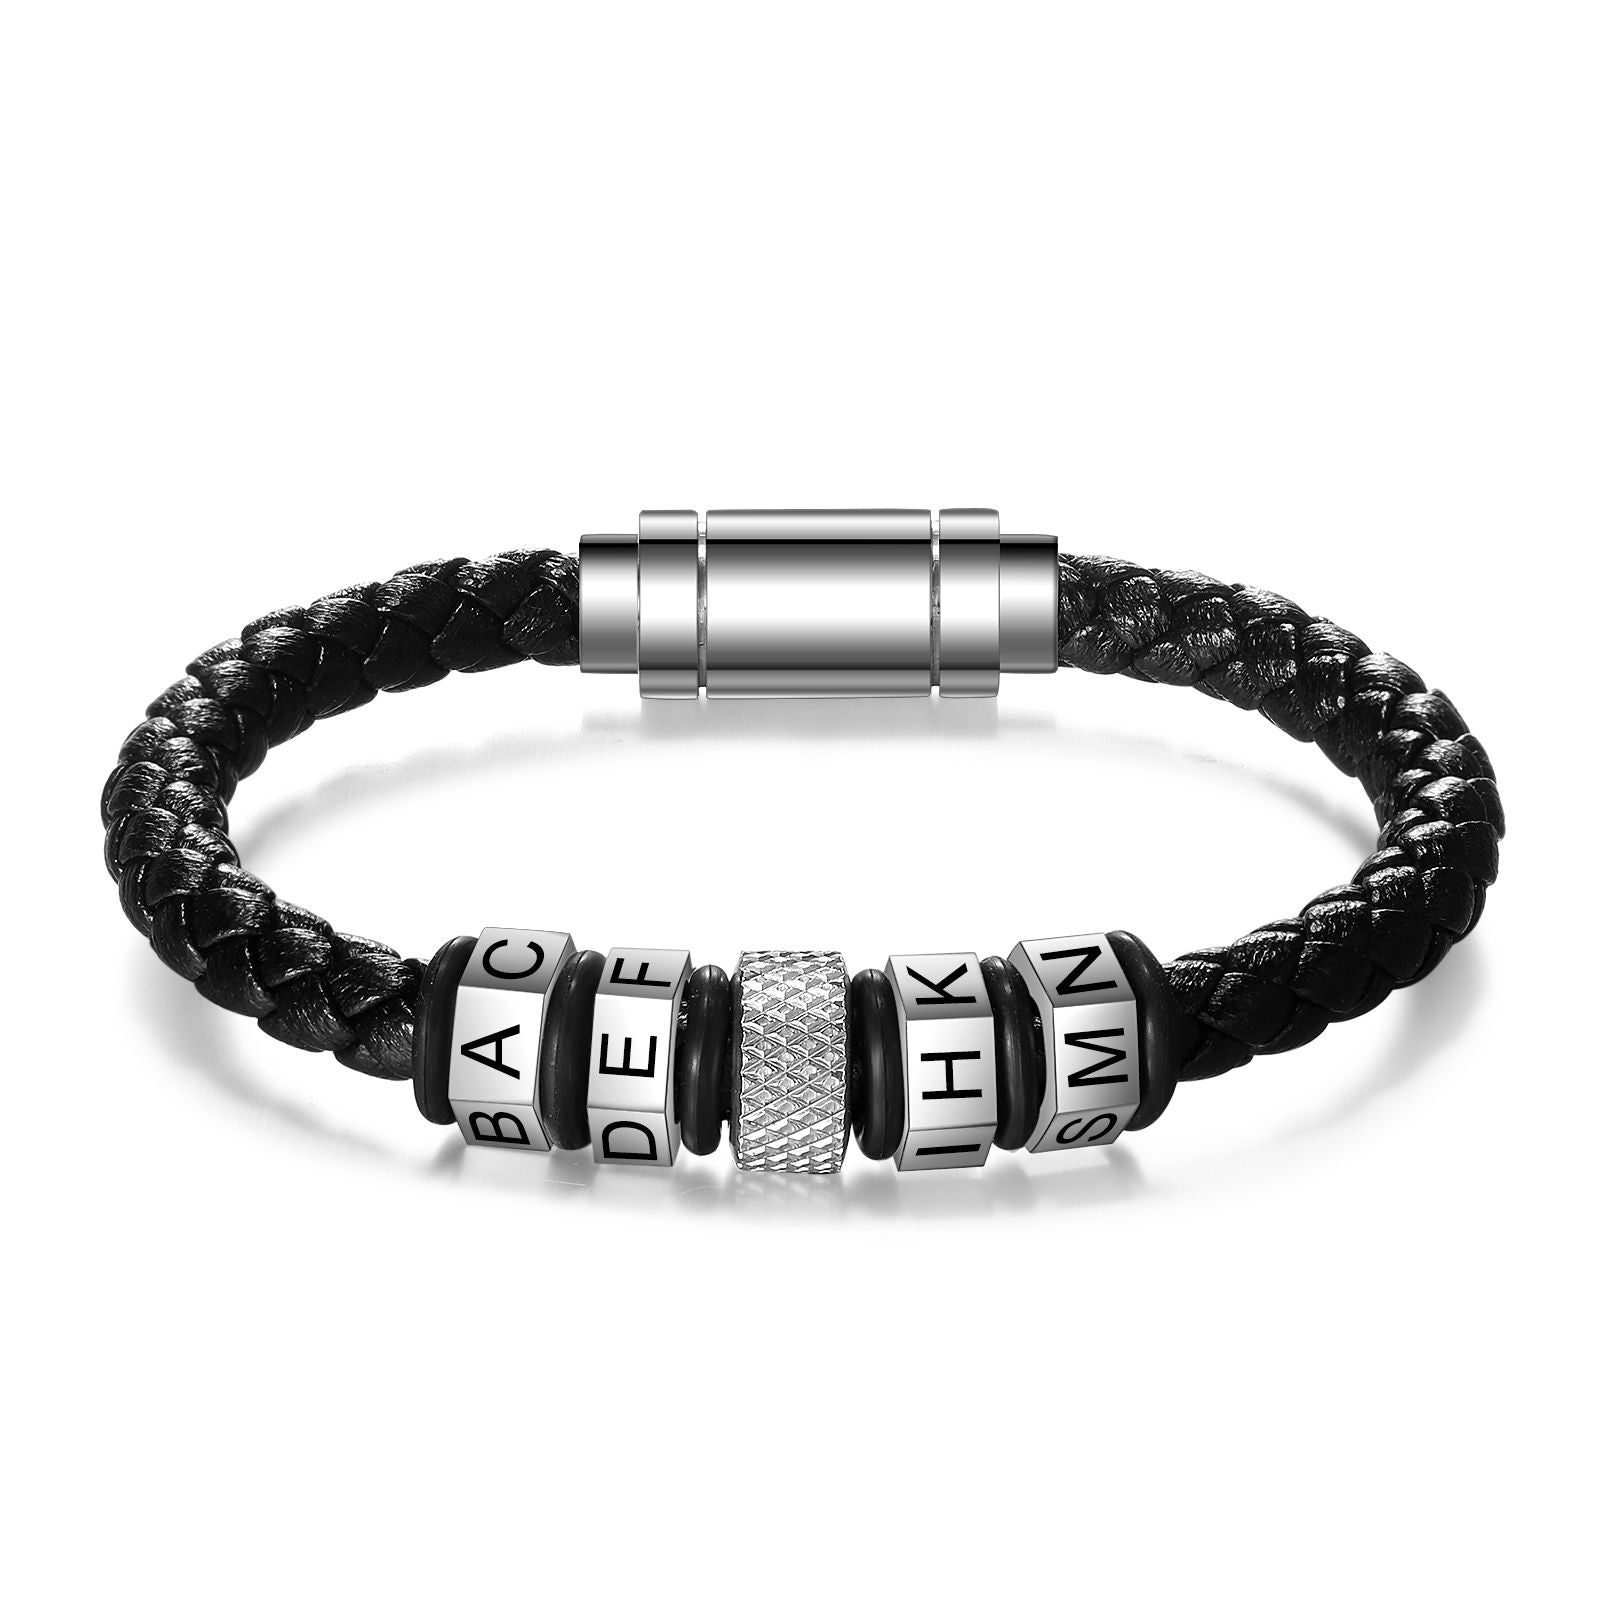 Personalised Leather Bracelet For Men | Bespoke Bracelet For Him